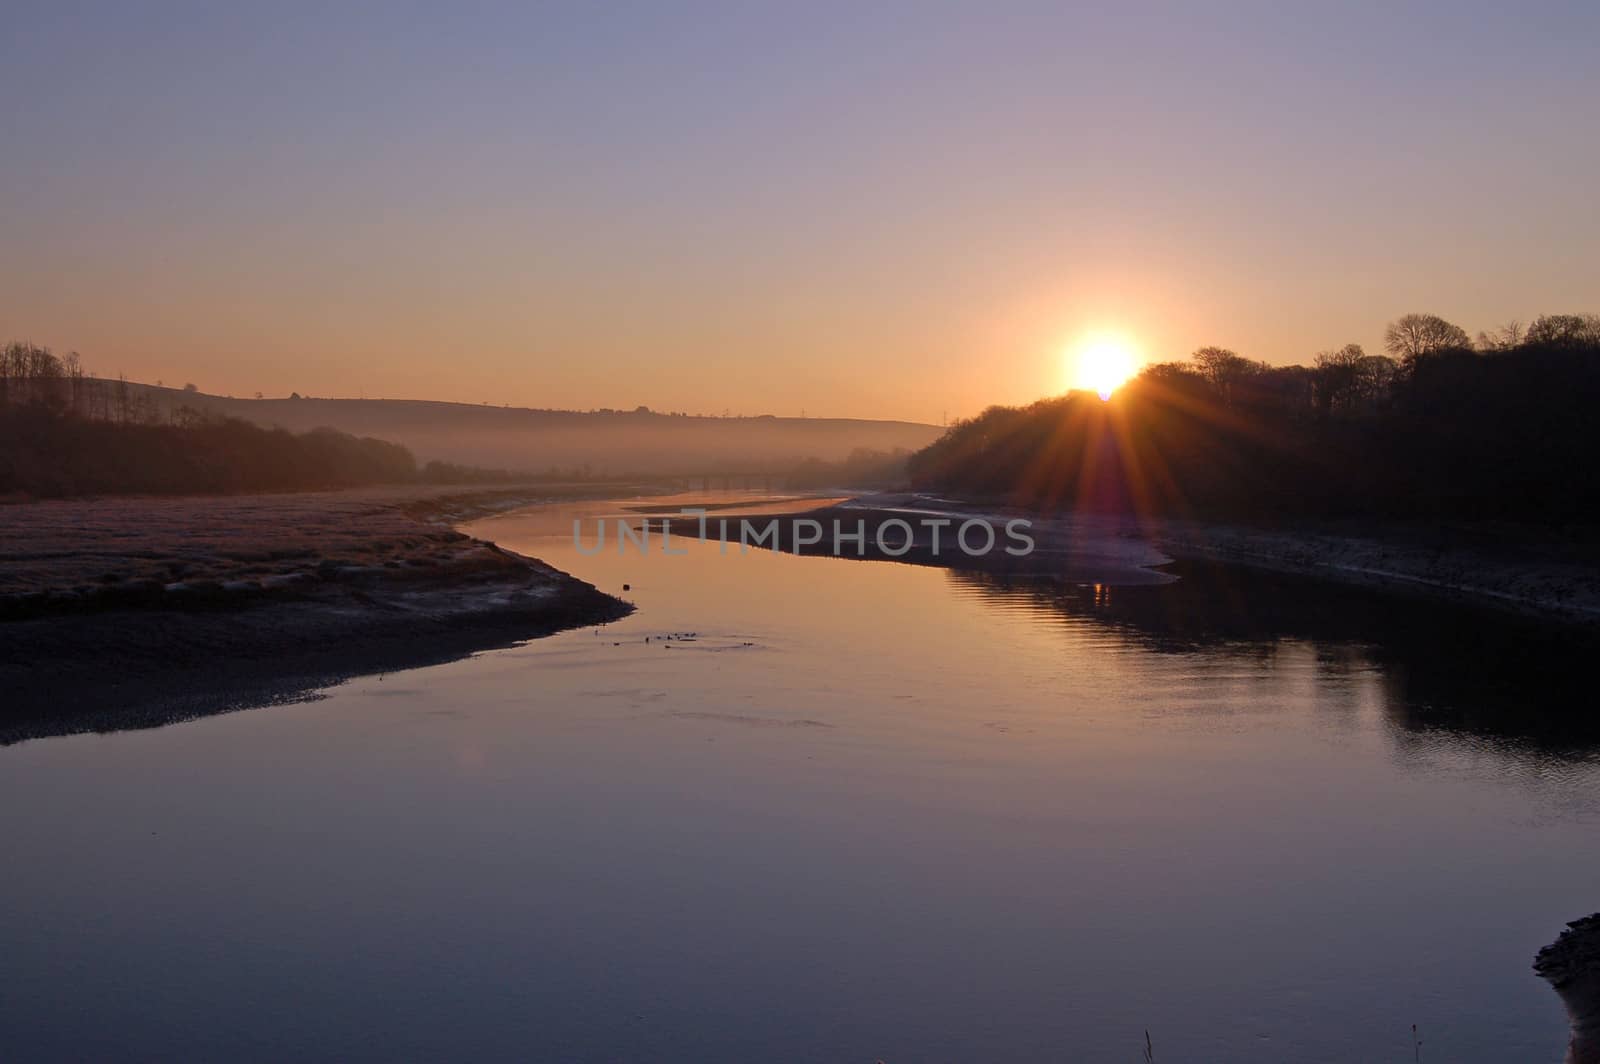 Sunrise over the River Torridge, near the ancient port of Bideford, in North Devon, England